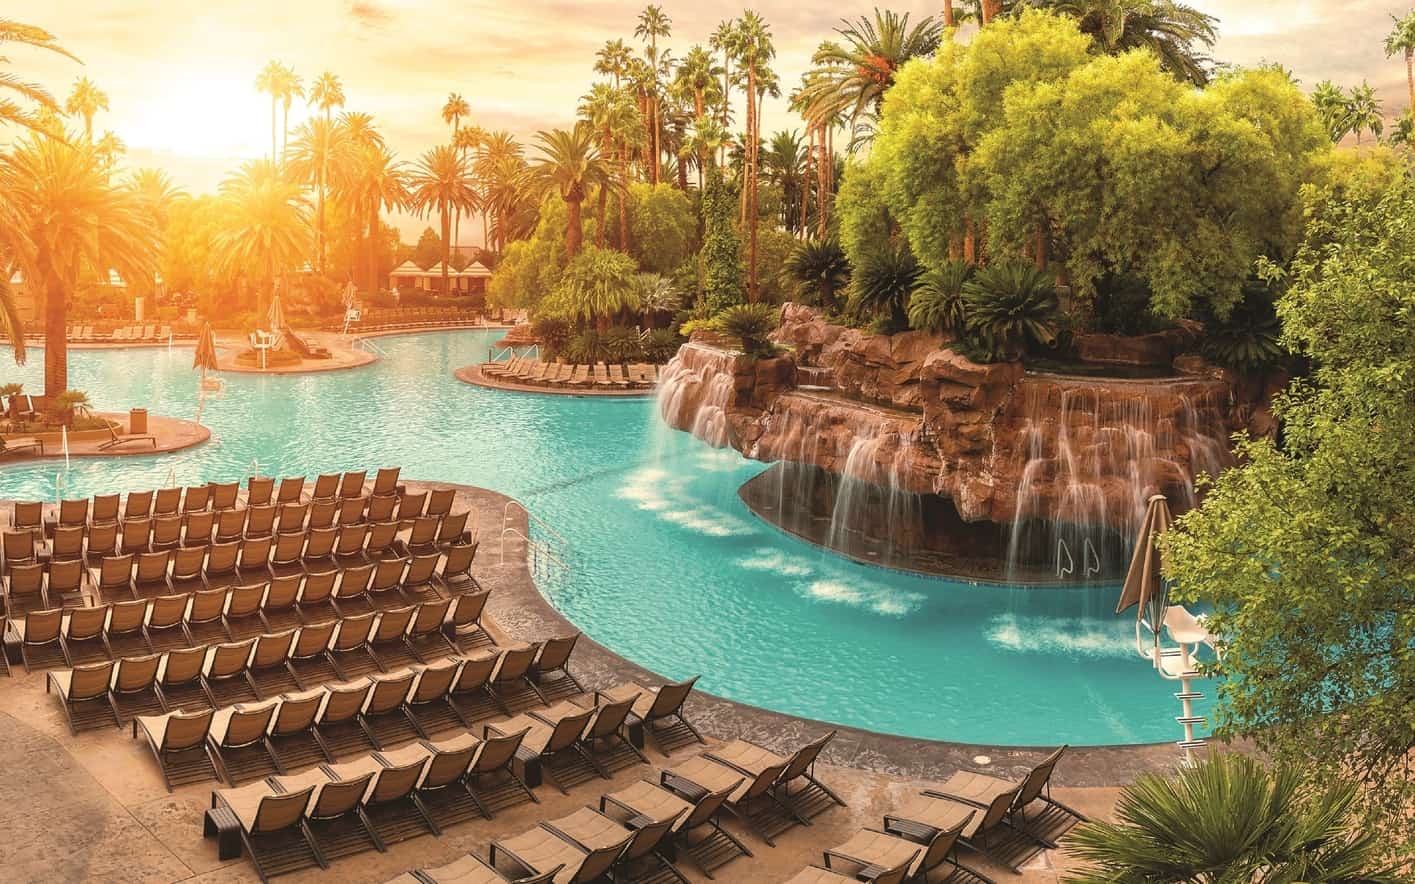 The Mirage Pool, aquatic parks in Las Vegas